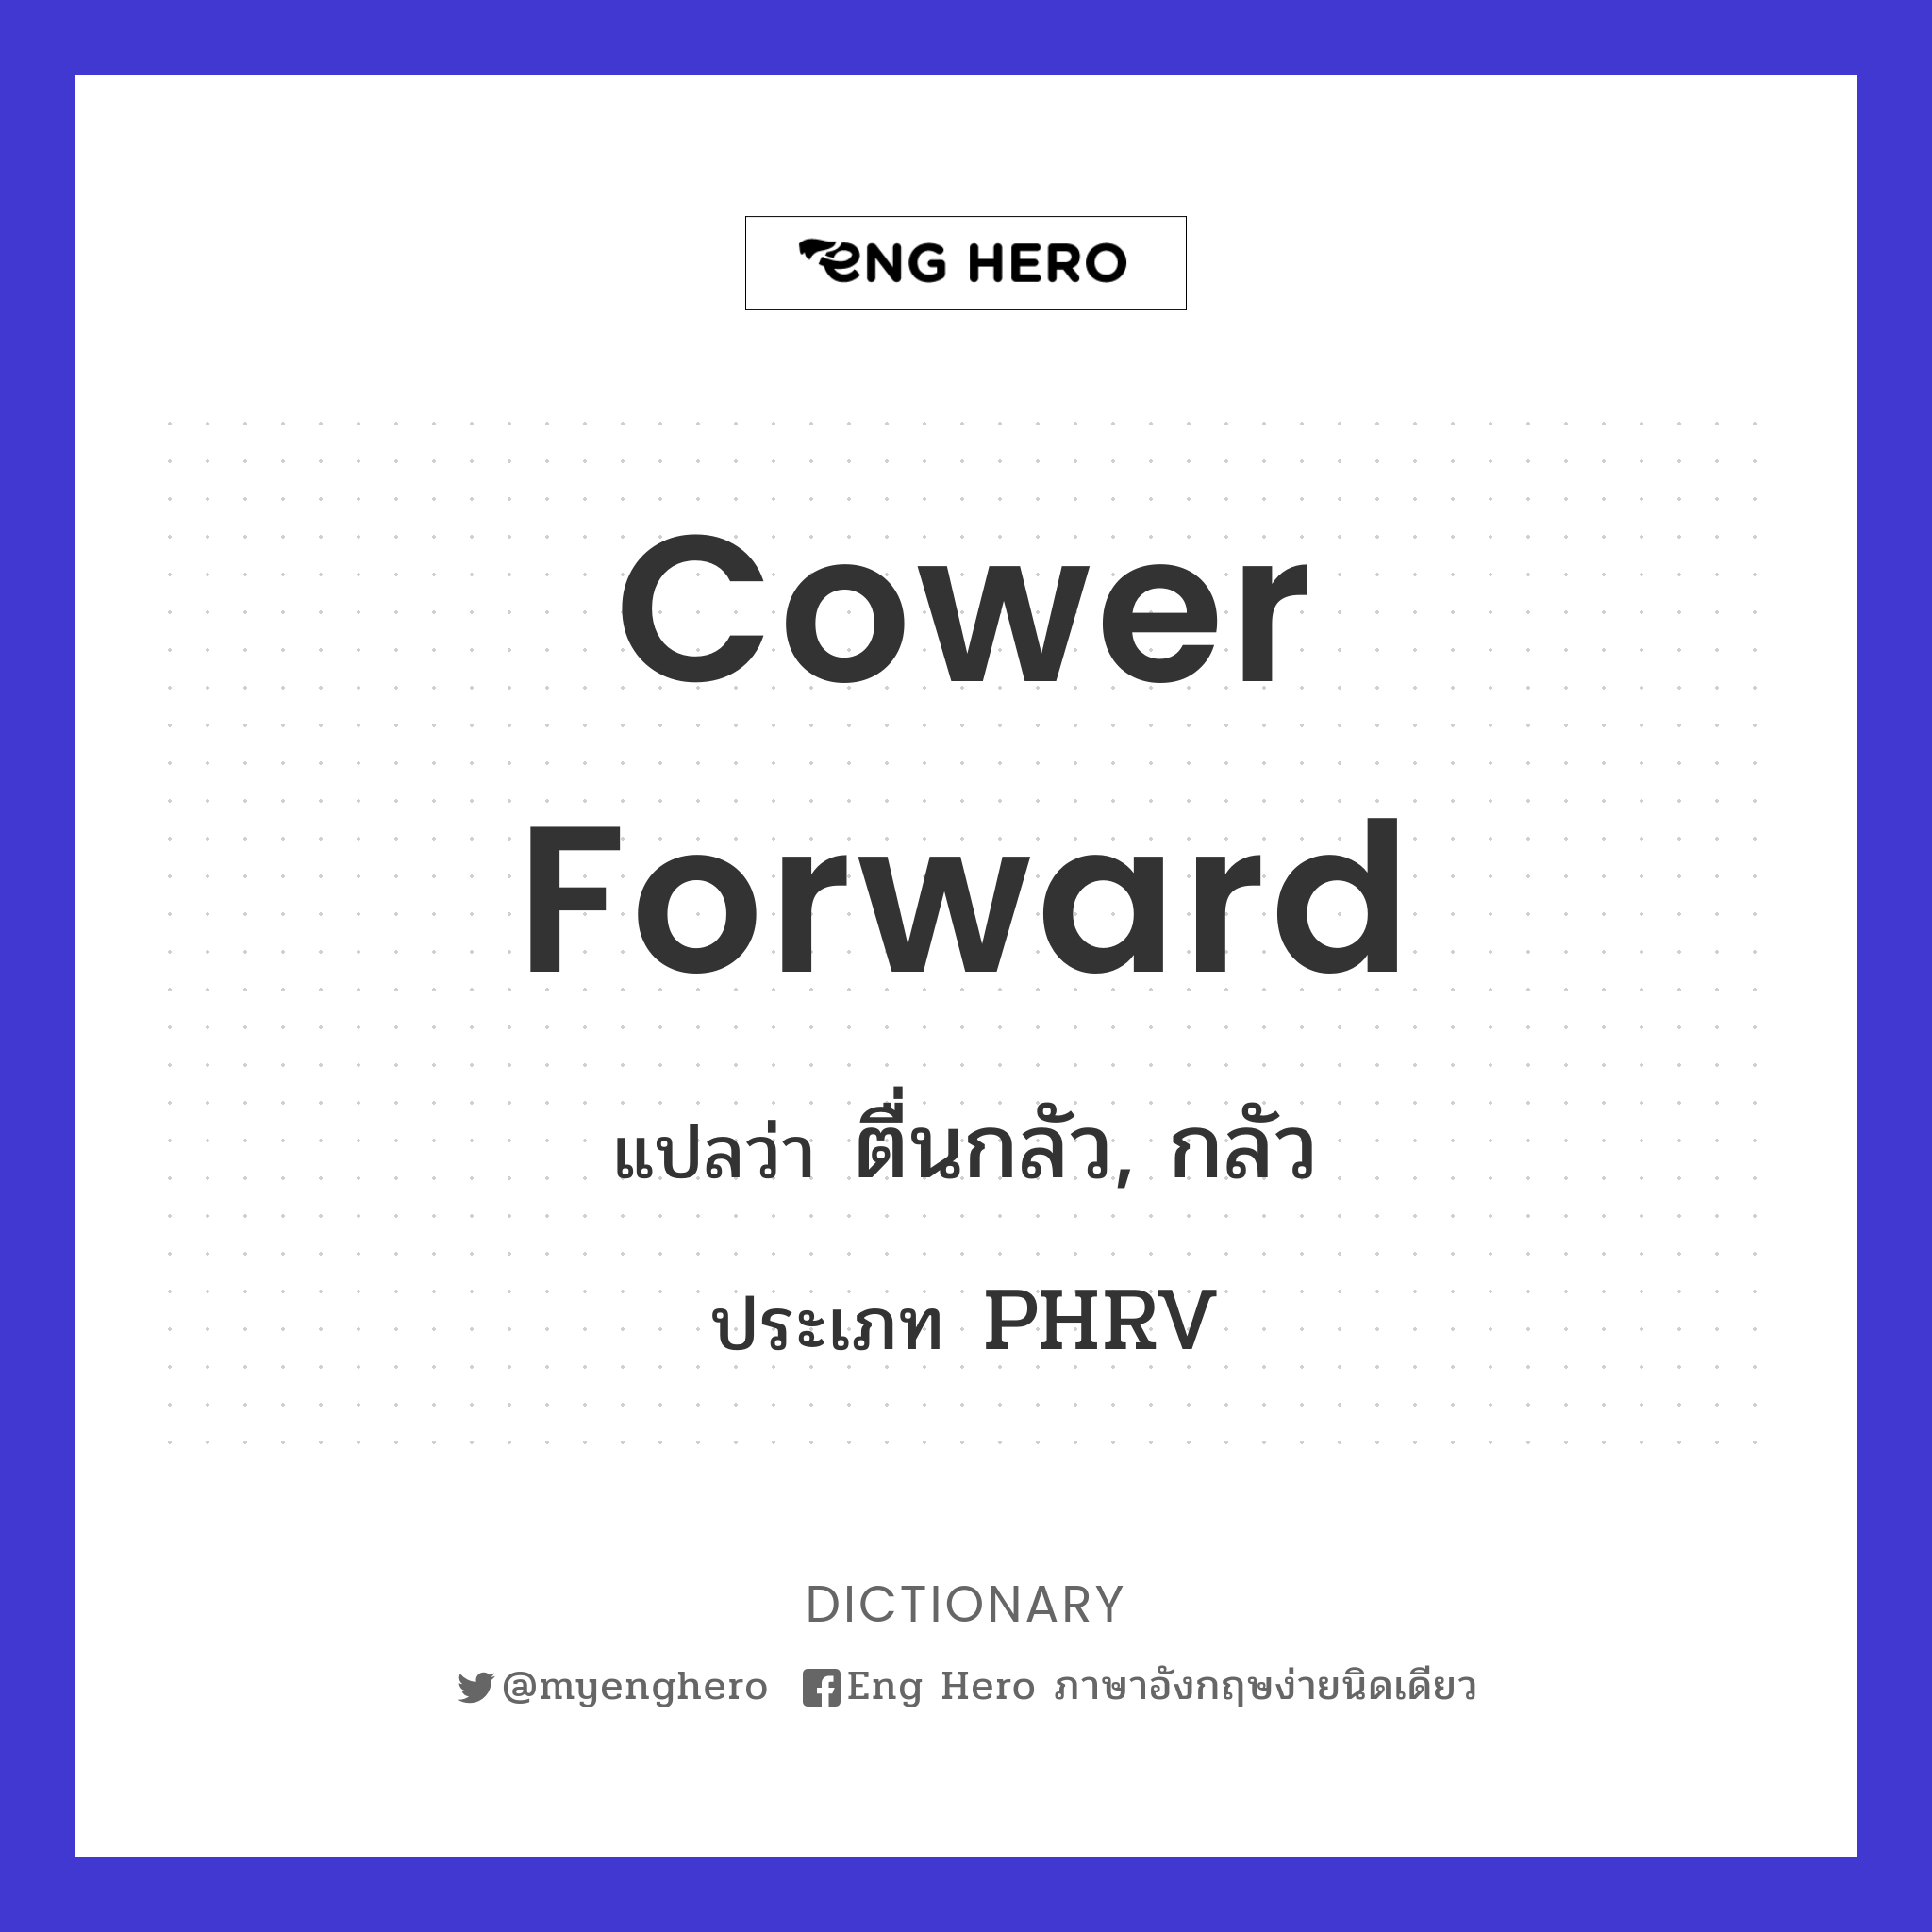 cower forward